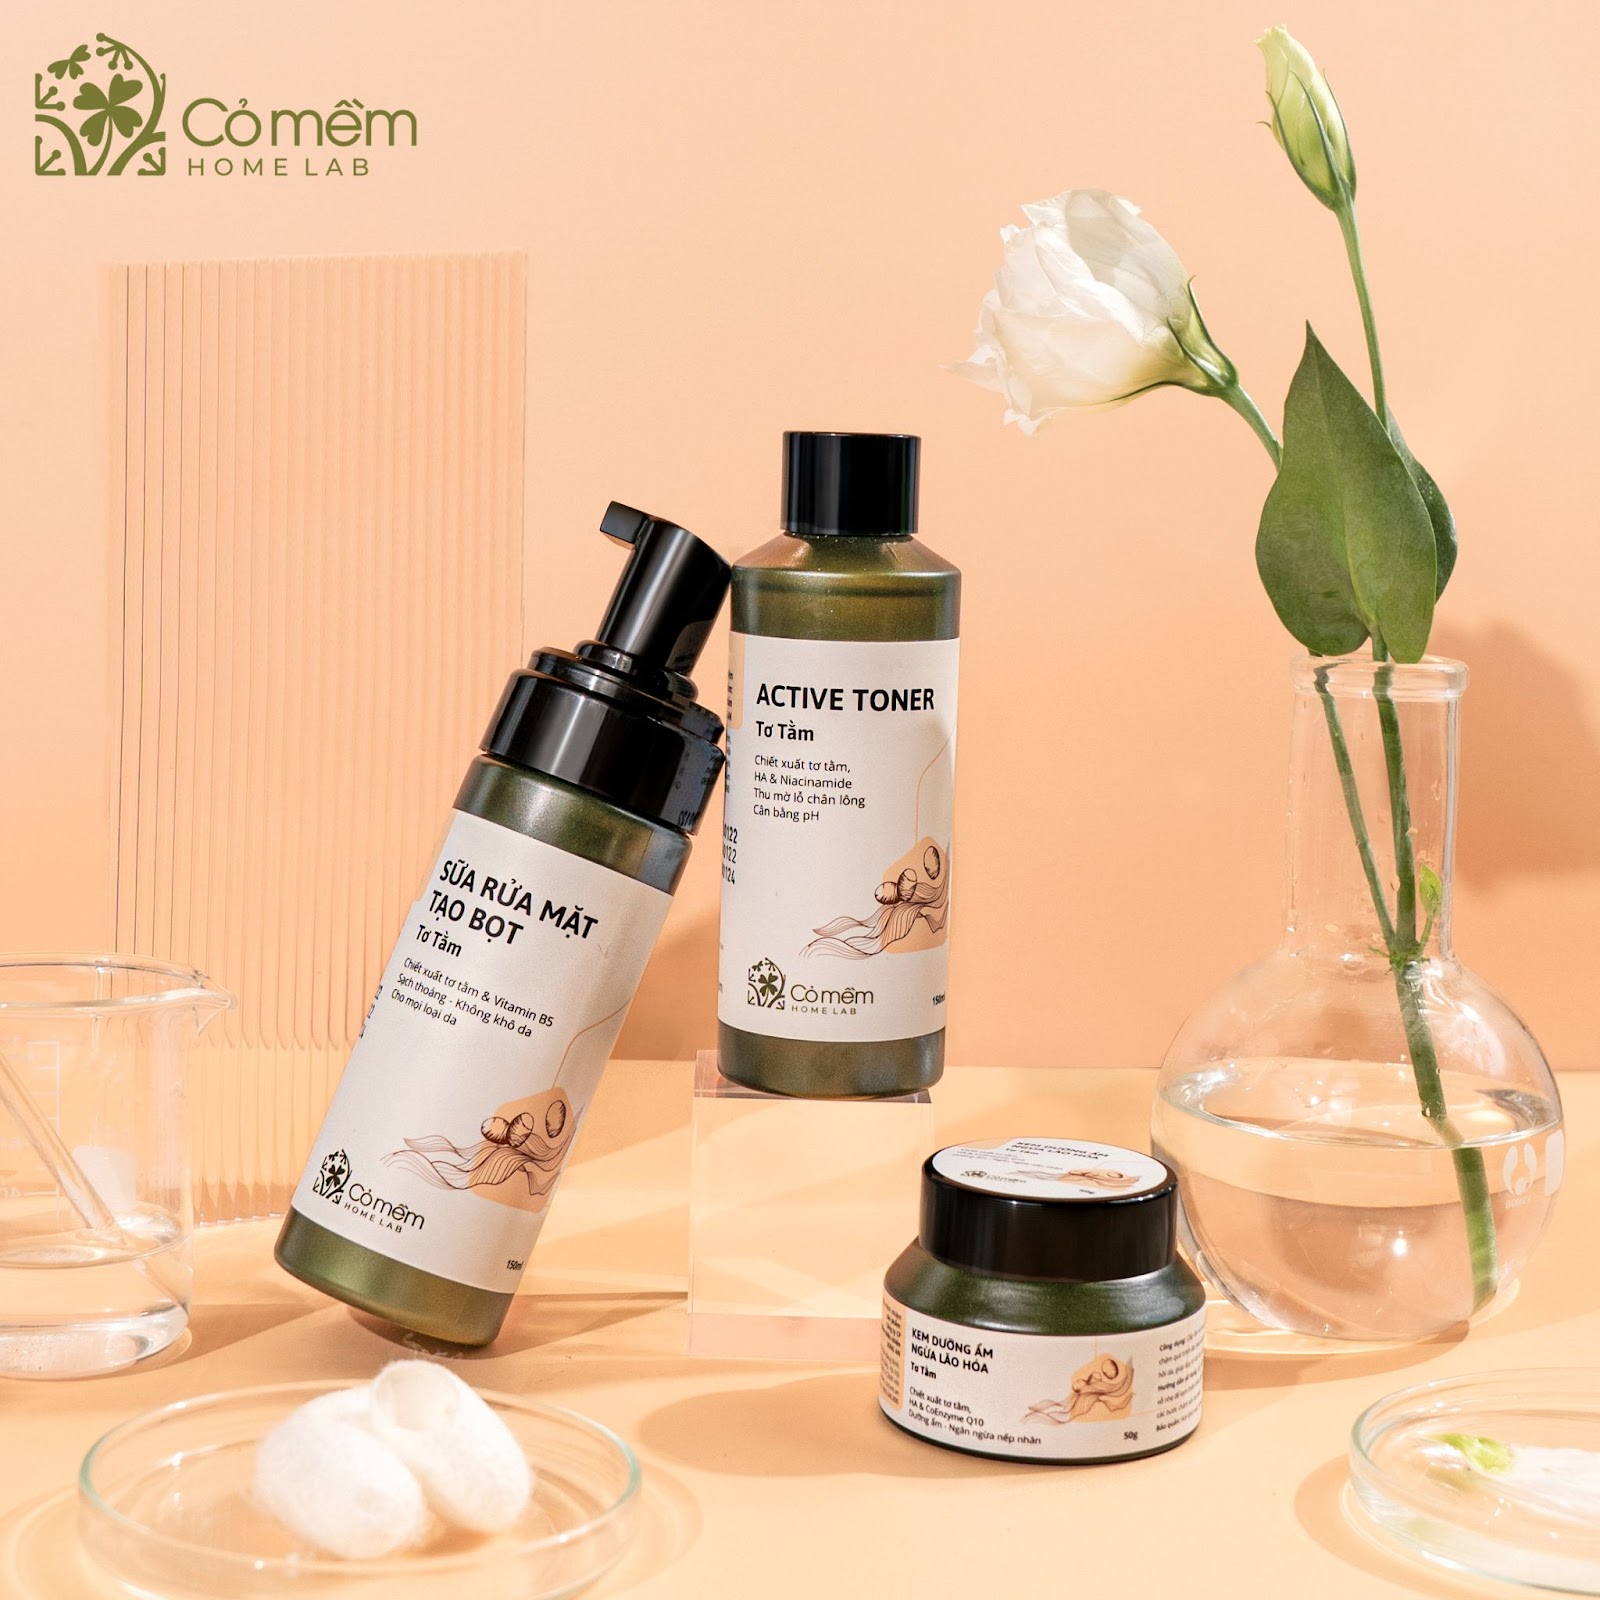 Gentle Grass Silk Skin Care Set Review: Minimalist - Gentle - For delicate skin - 6